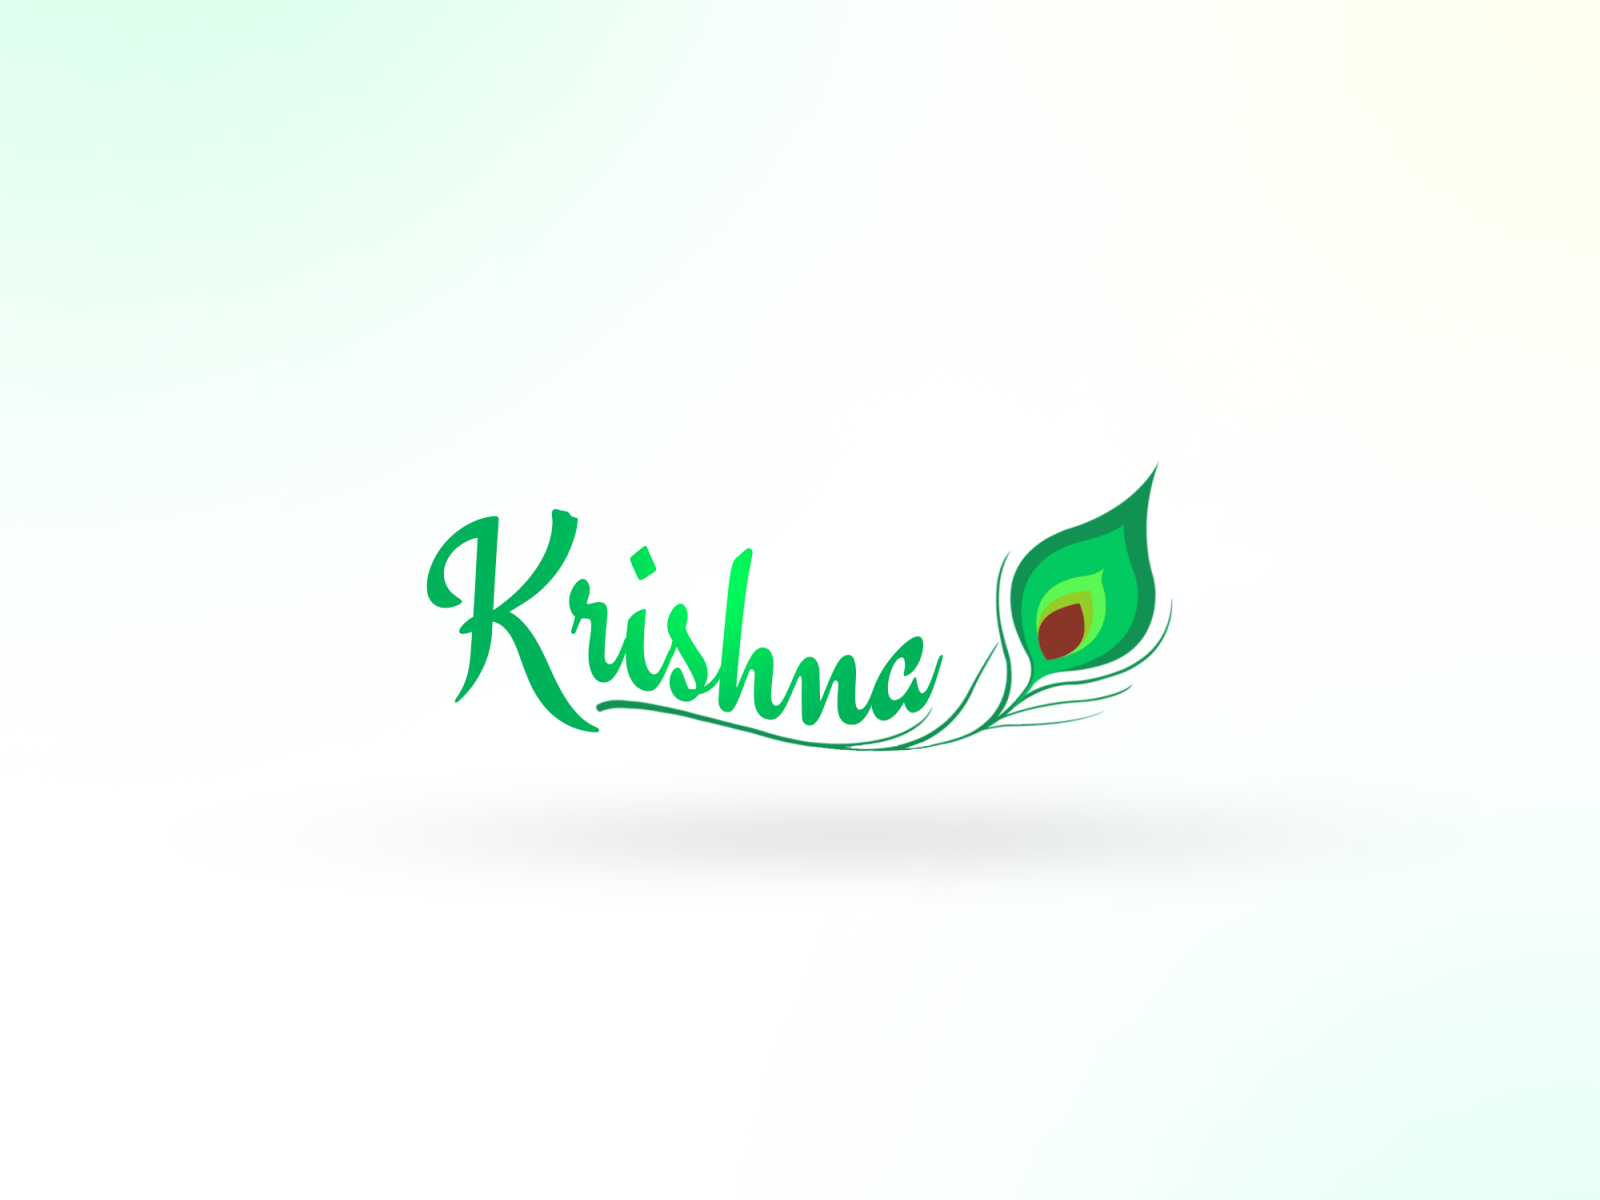 Aggregate more than 142 krishna logo wallpaper latest